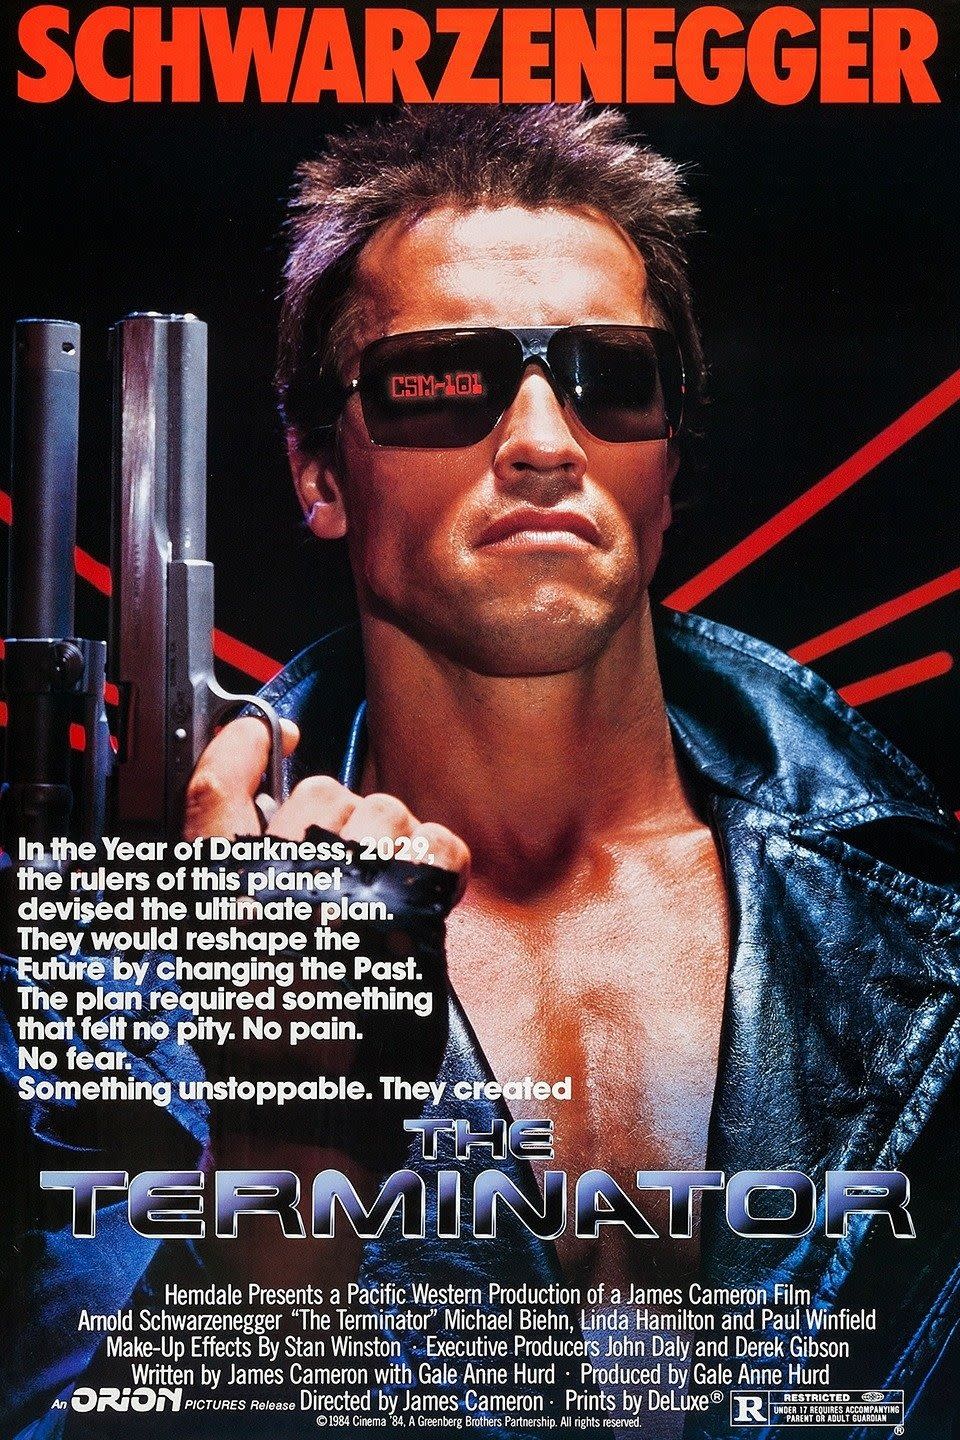 3) The Terminator (1984)